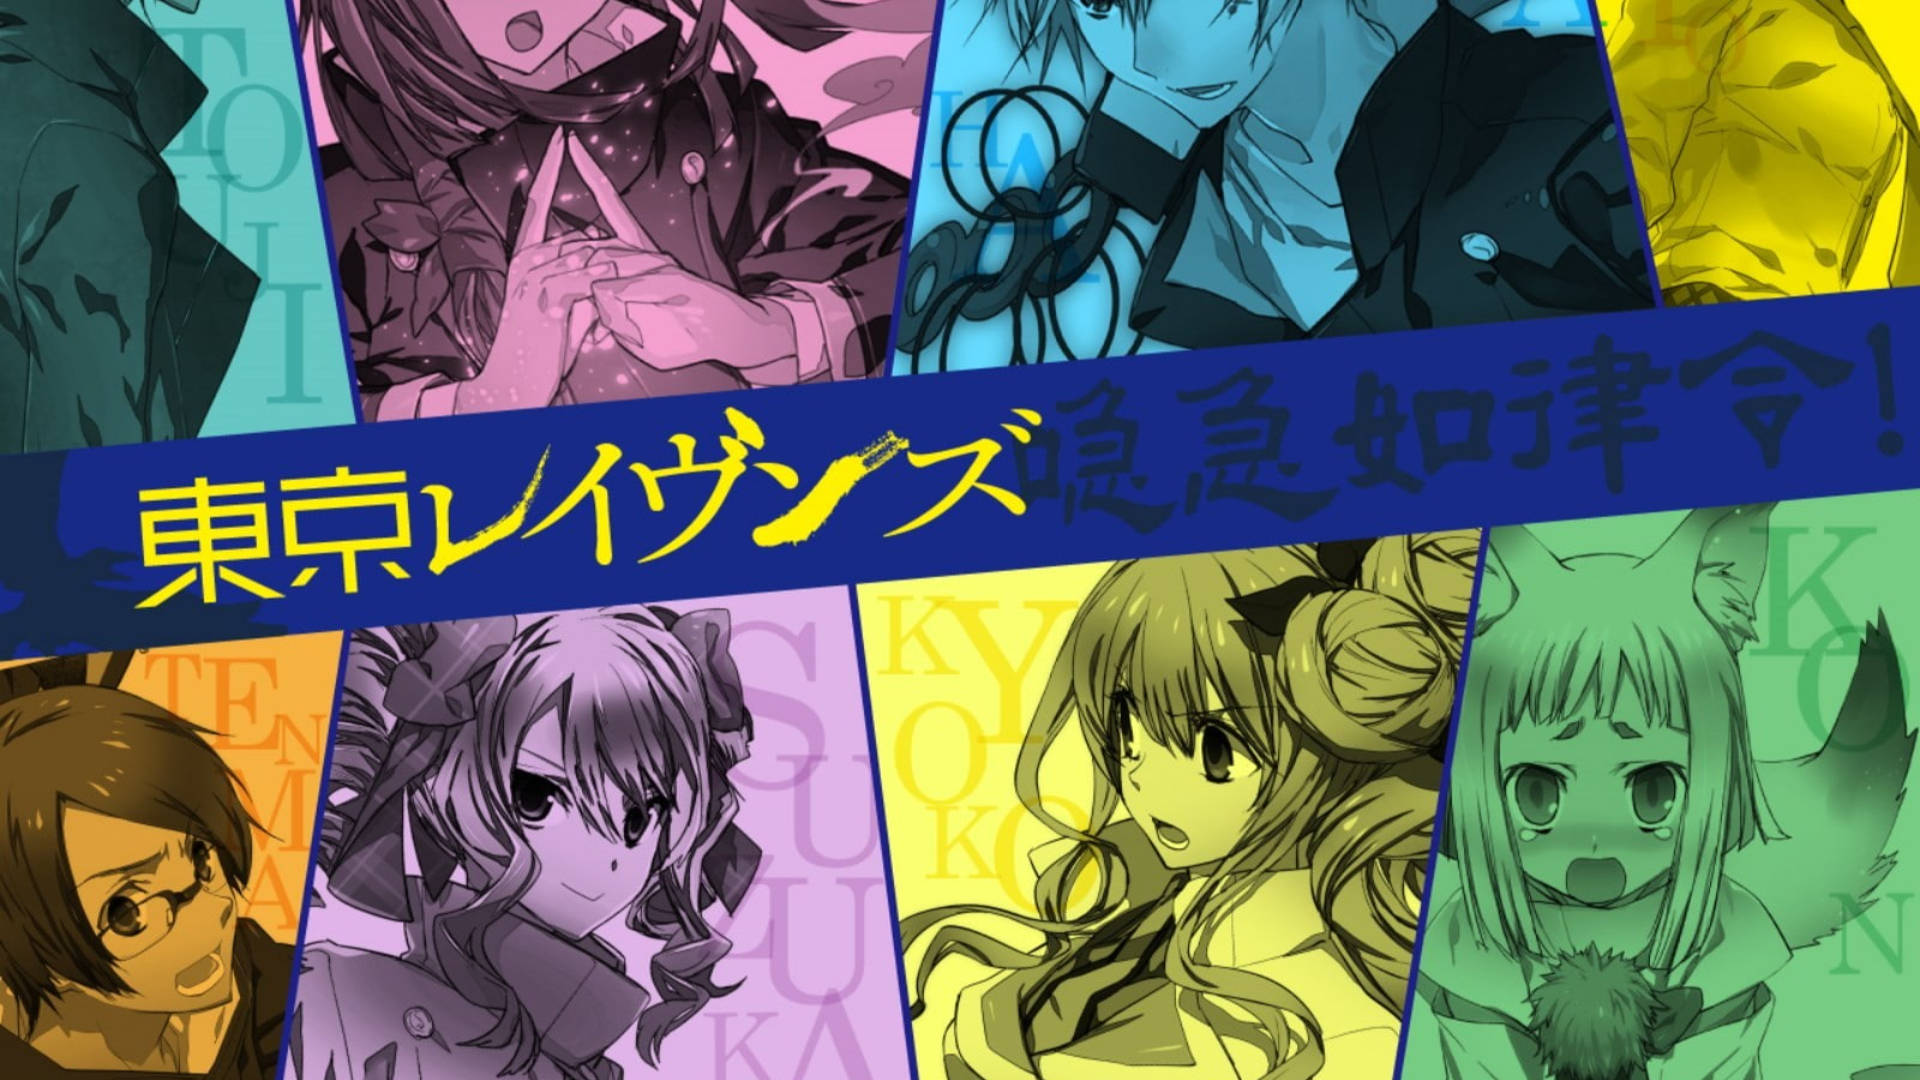 Download Tokyo Ravens Character Panels Wallpaper